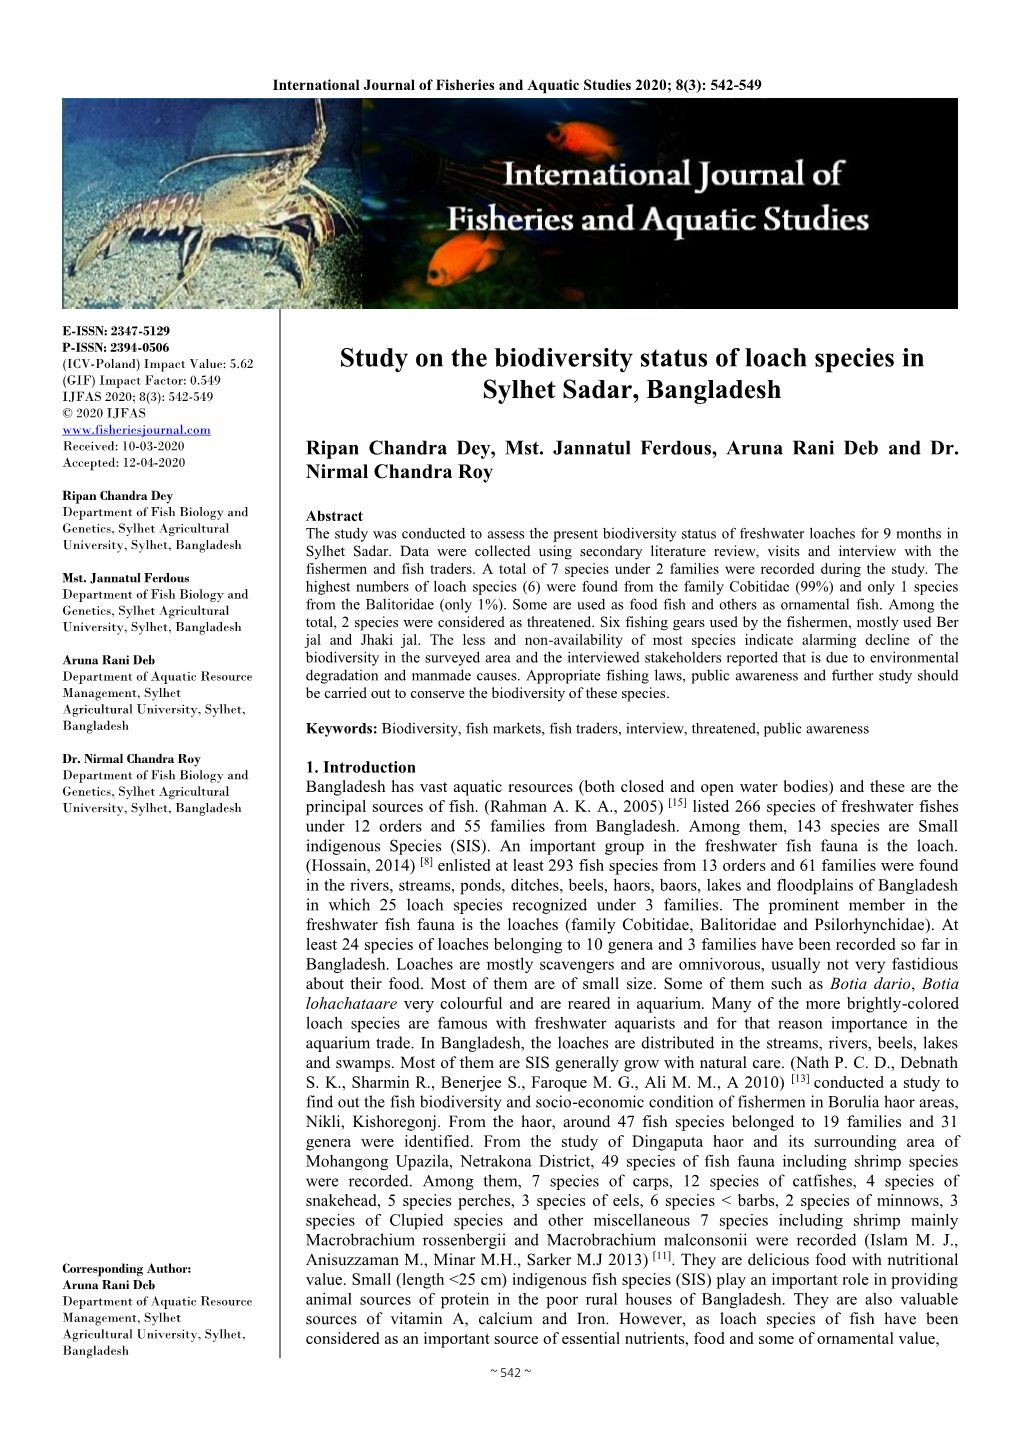 Study on the Biodiversity Status of Loach Species in Sylhet Sadar